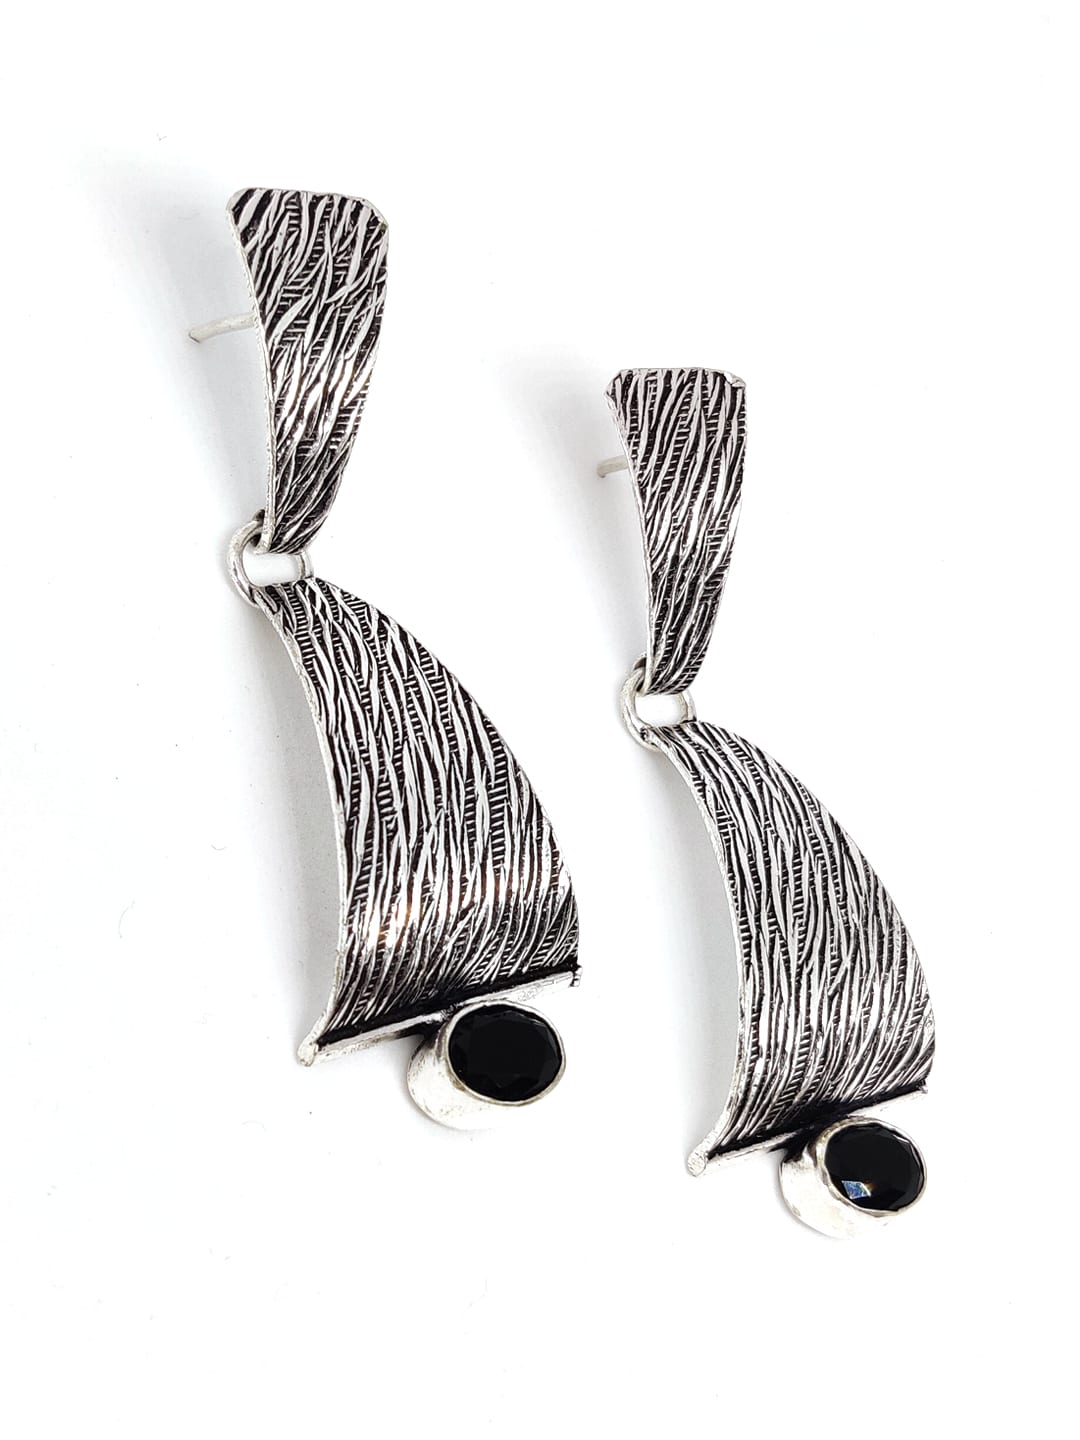 EL REGALO Silver-Toned Geometric Drop Earrings - for Women and Girls
Style ID: 16770272